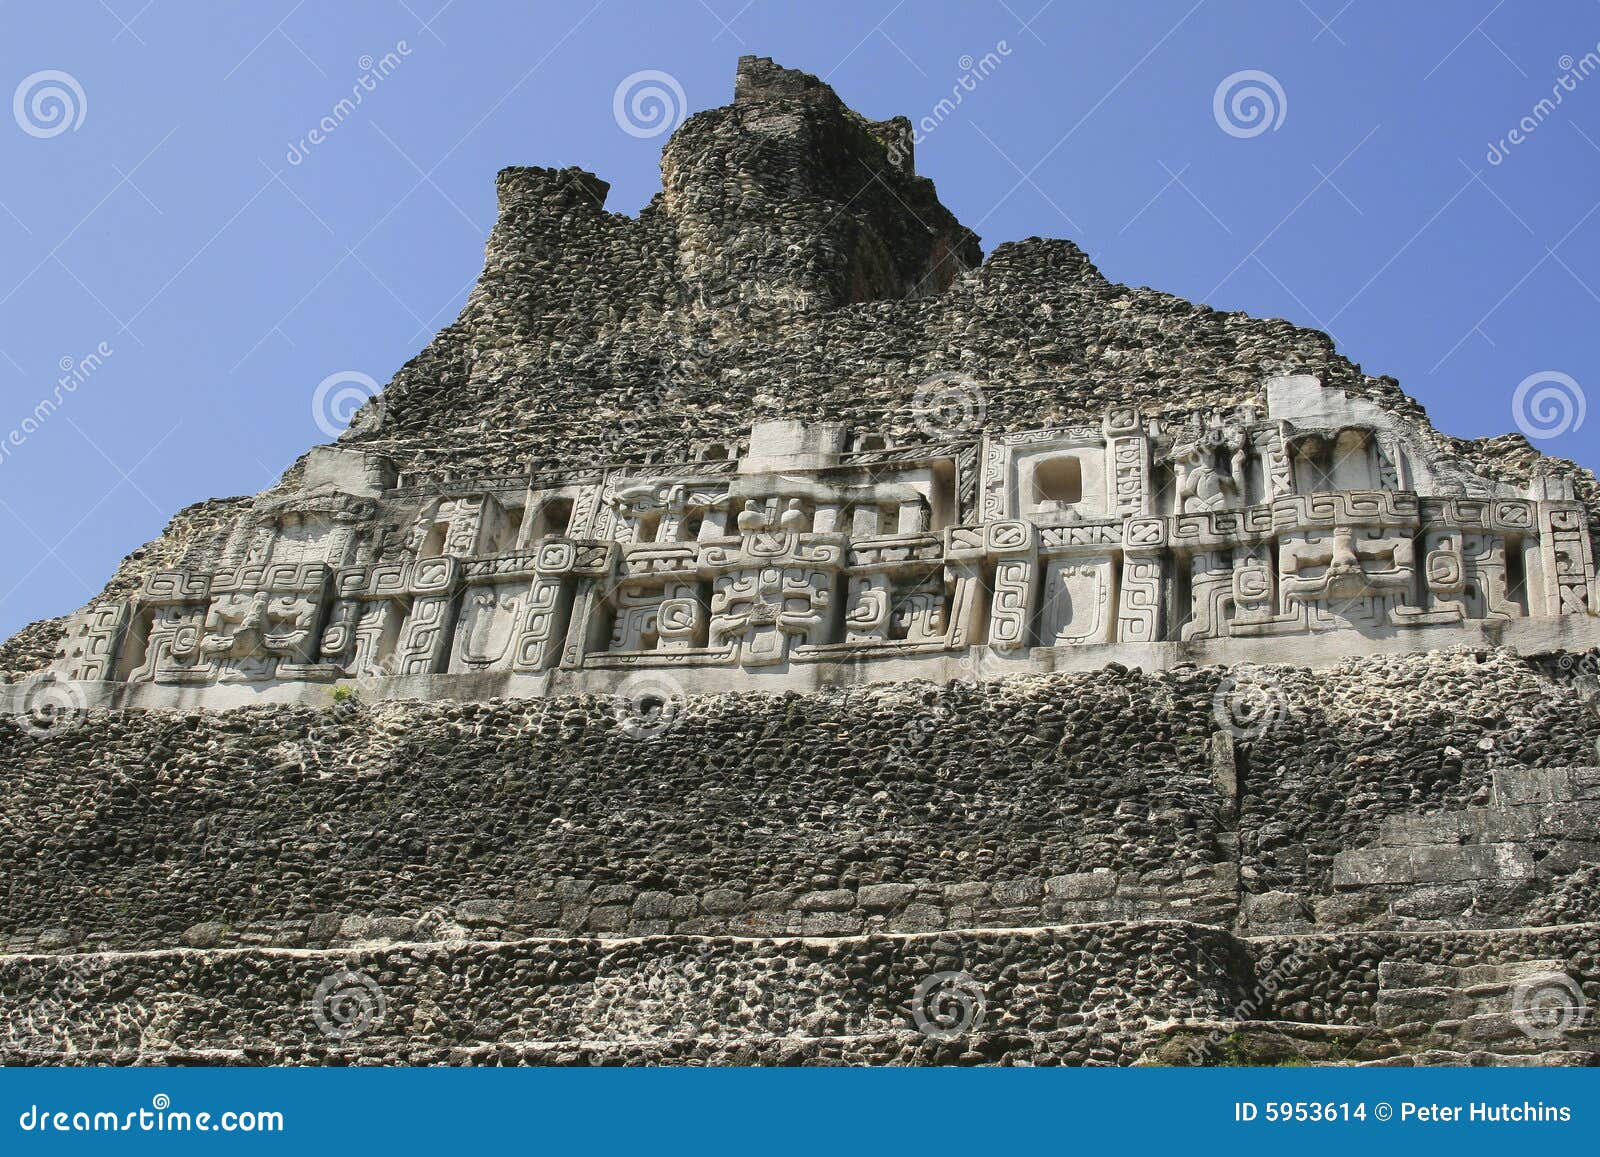 mayan ruin in belize